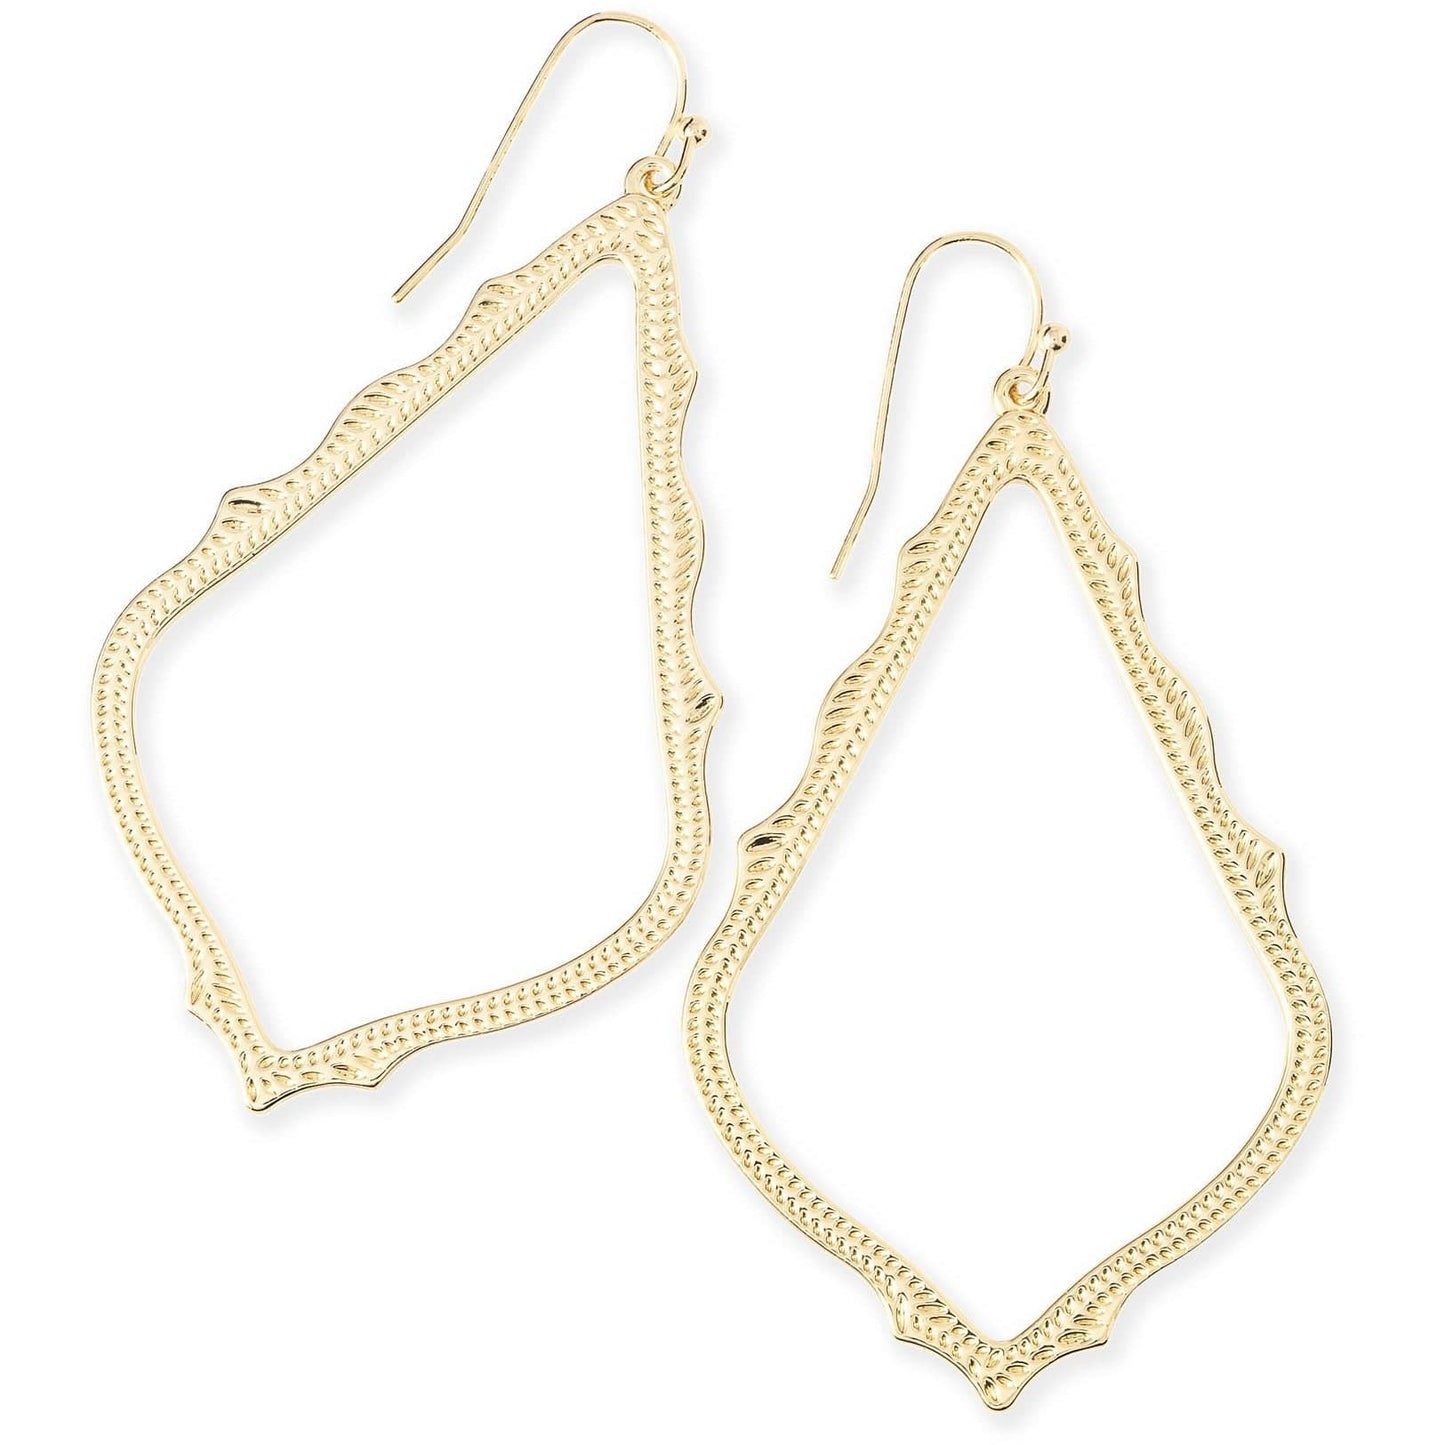 Kendra Scott - Sophee Drop Earrings in Gold - Findlay Rowe Designs